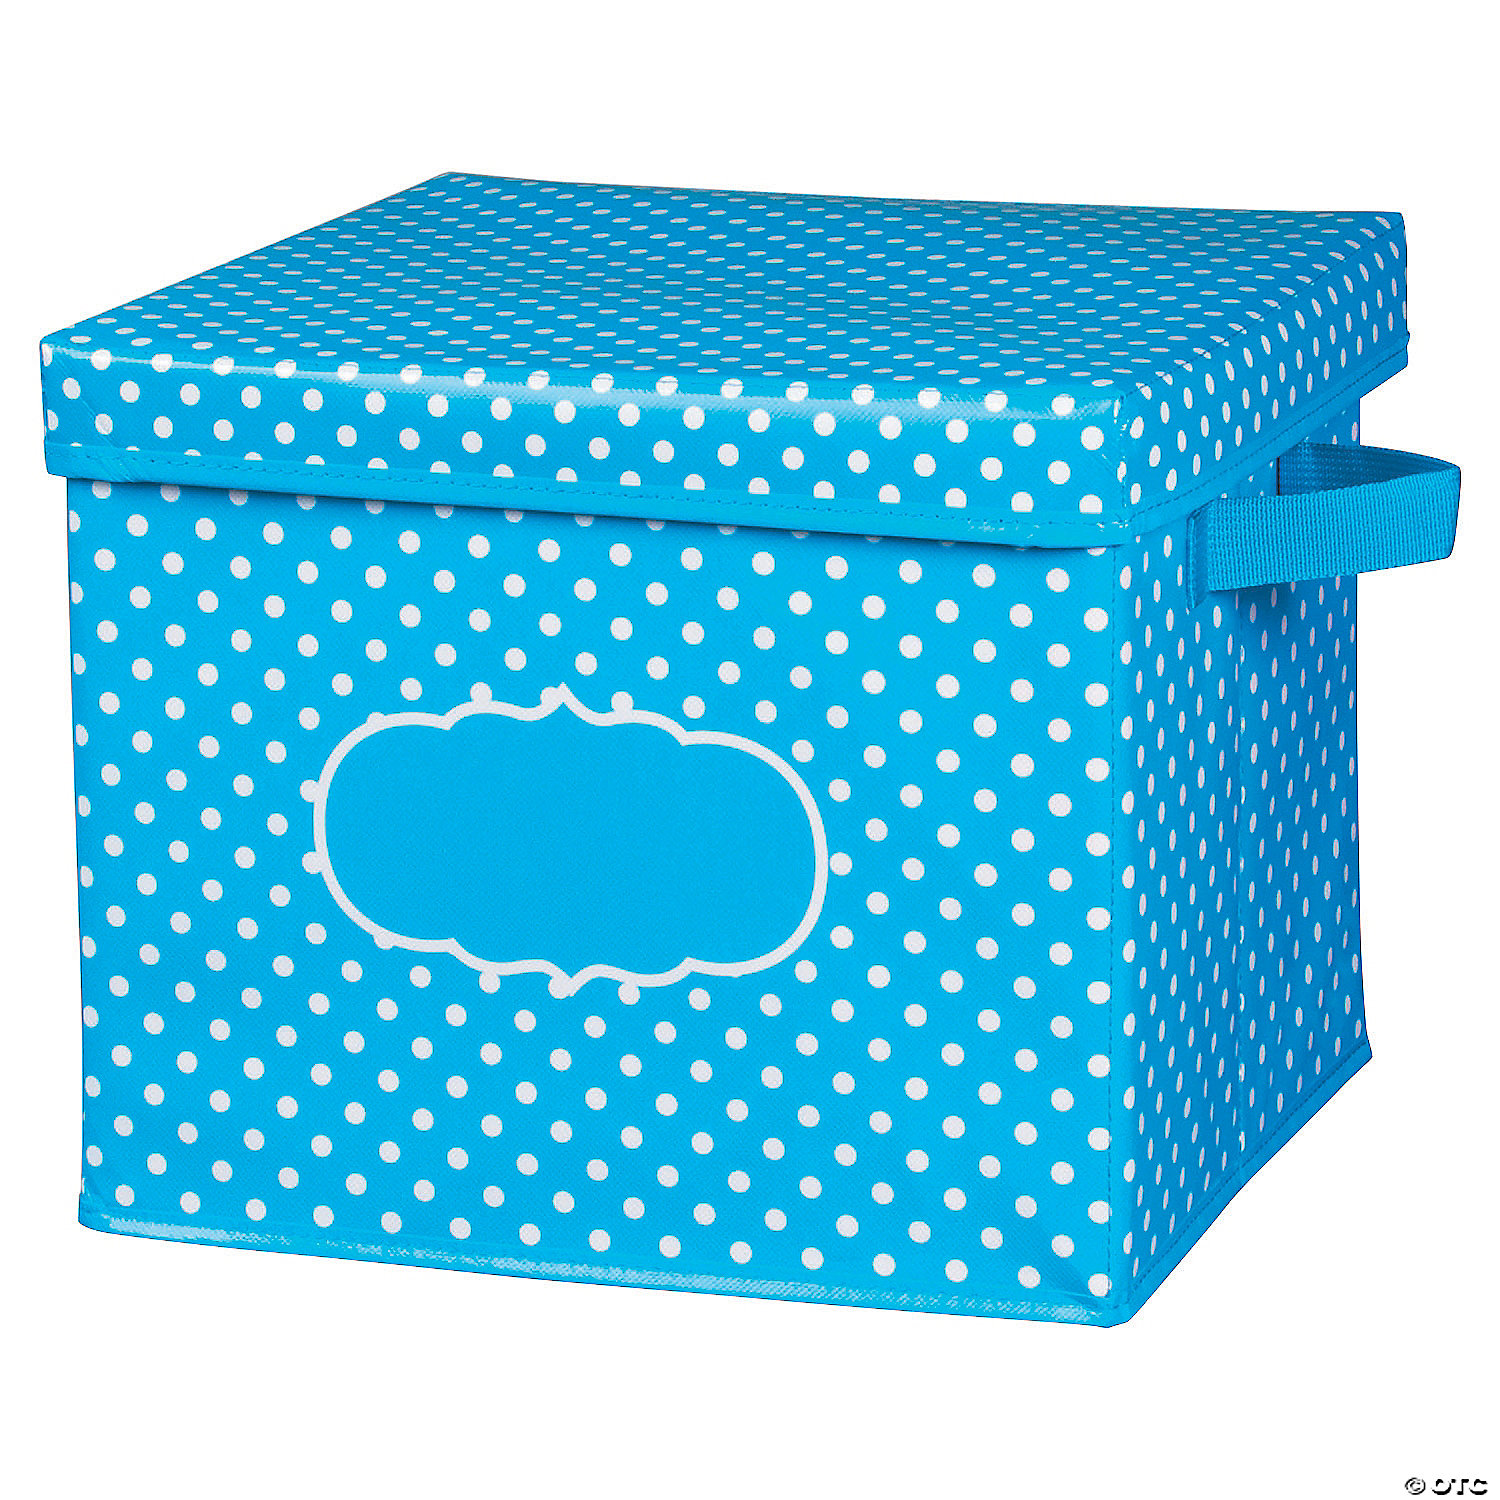 Teacher Created Resources Lime Polka Dots Storage Box